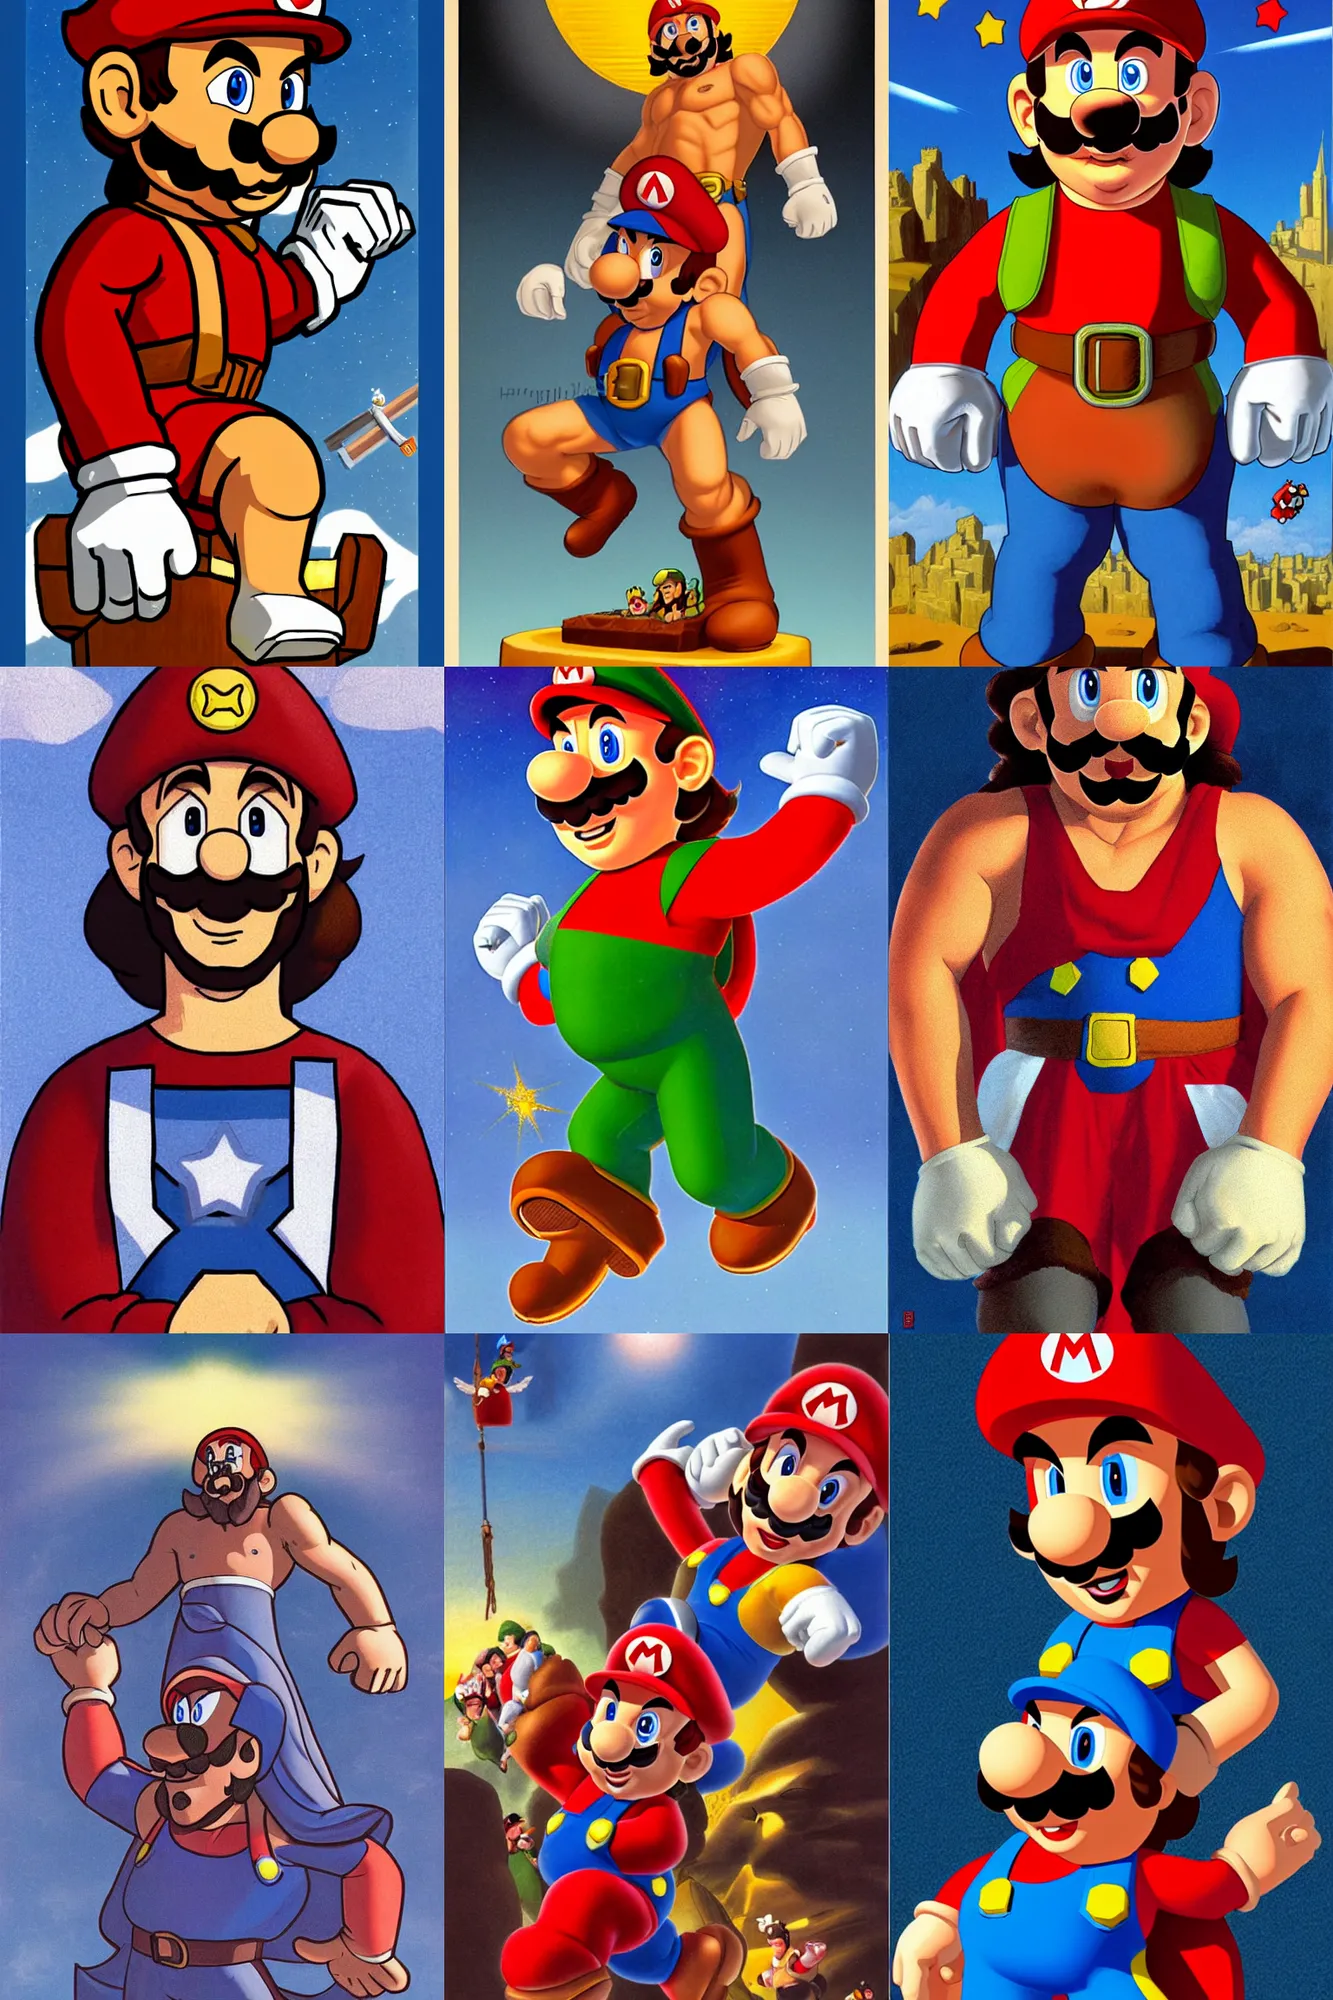 Prompt: Jesus as Mario from Super Mario Bros, Muscular, Superhero by Greg Hildebrandt, halo above head